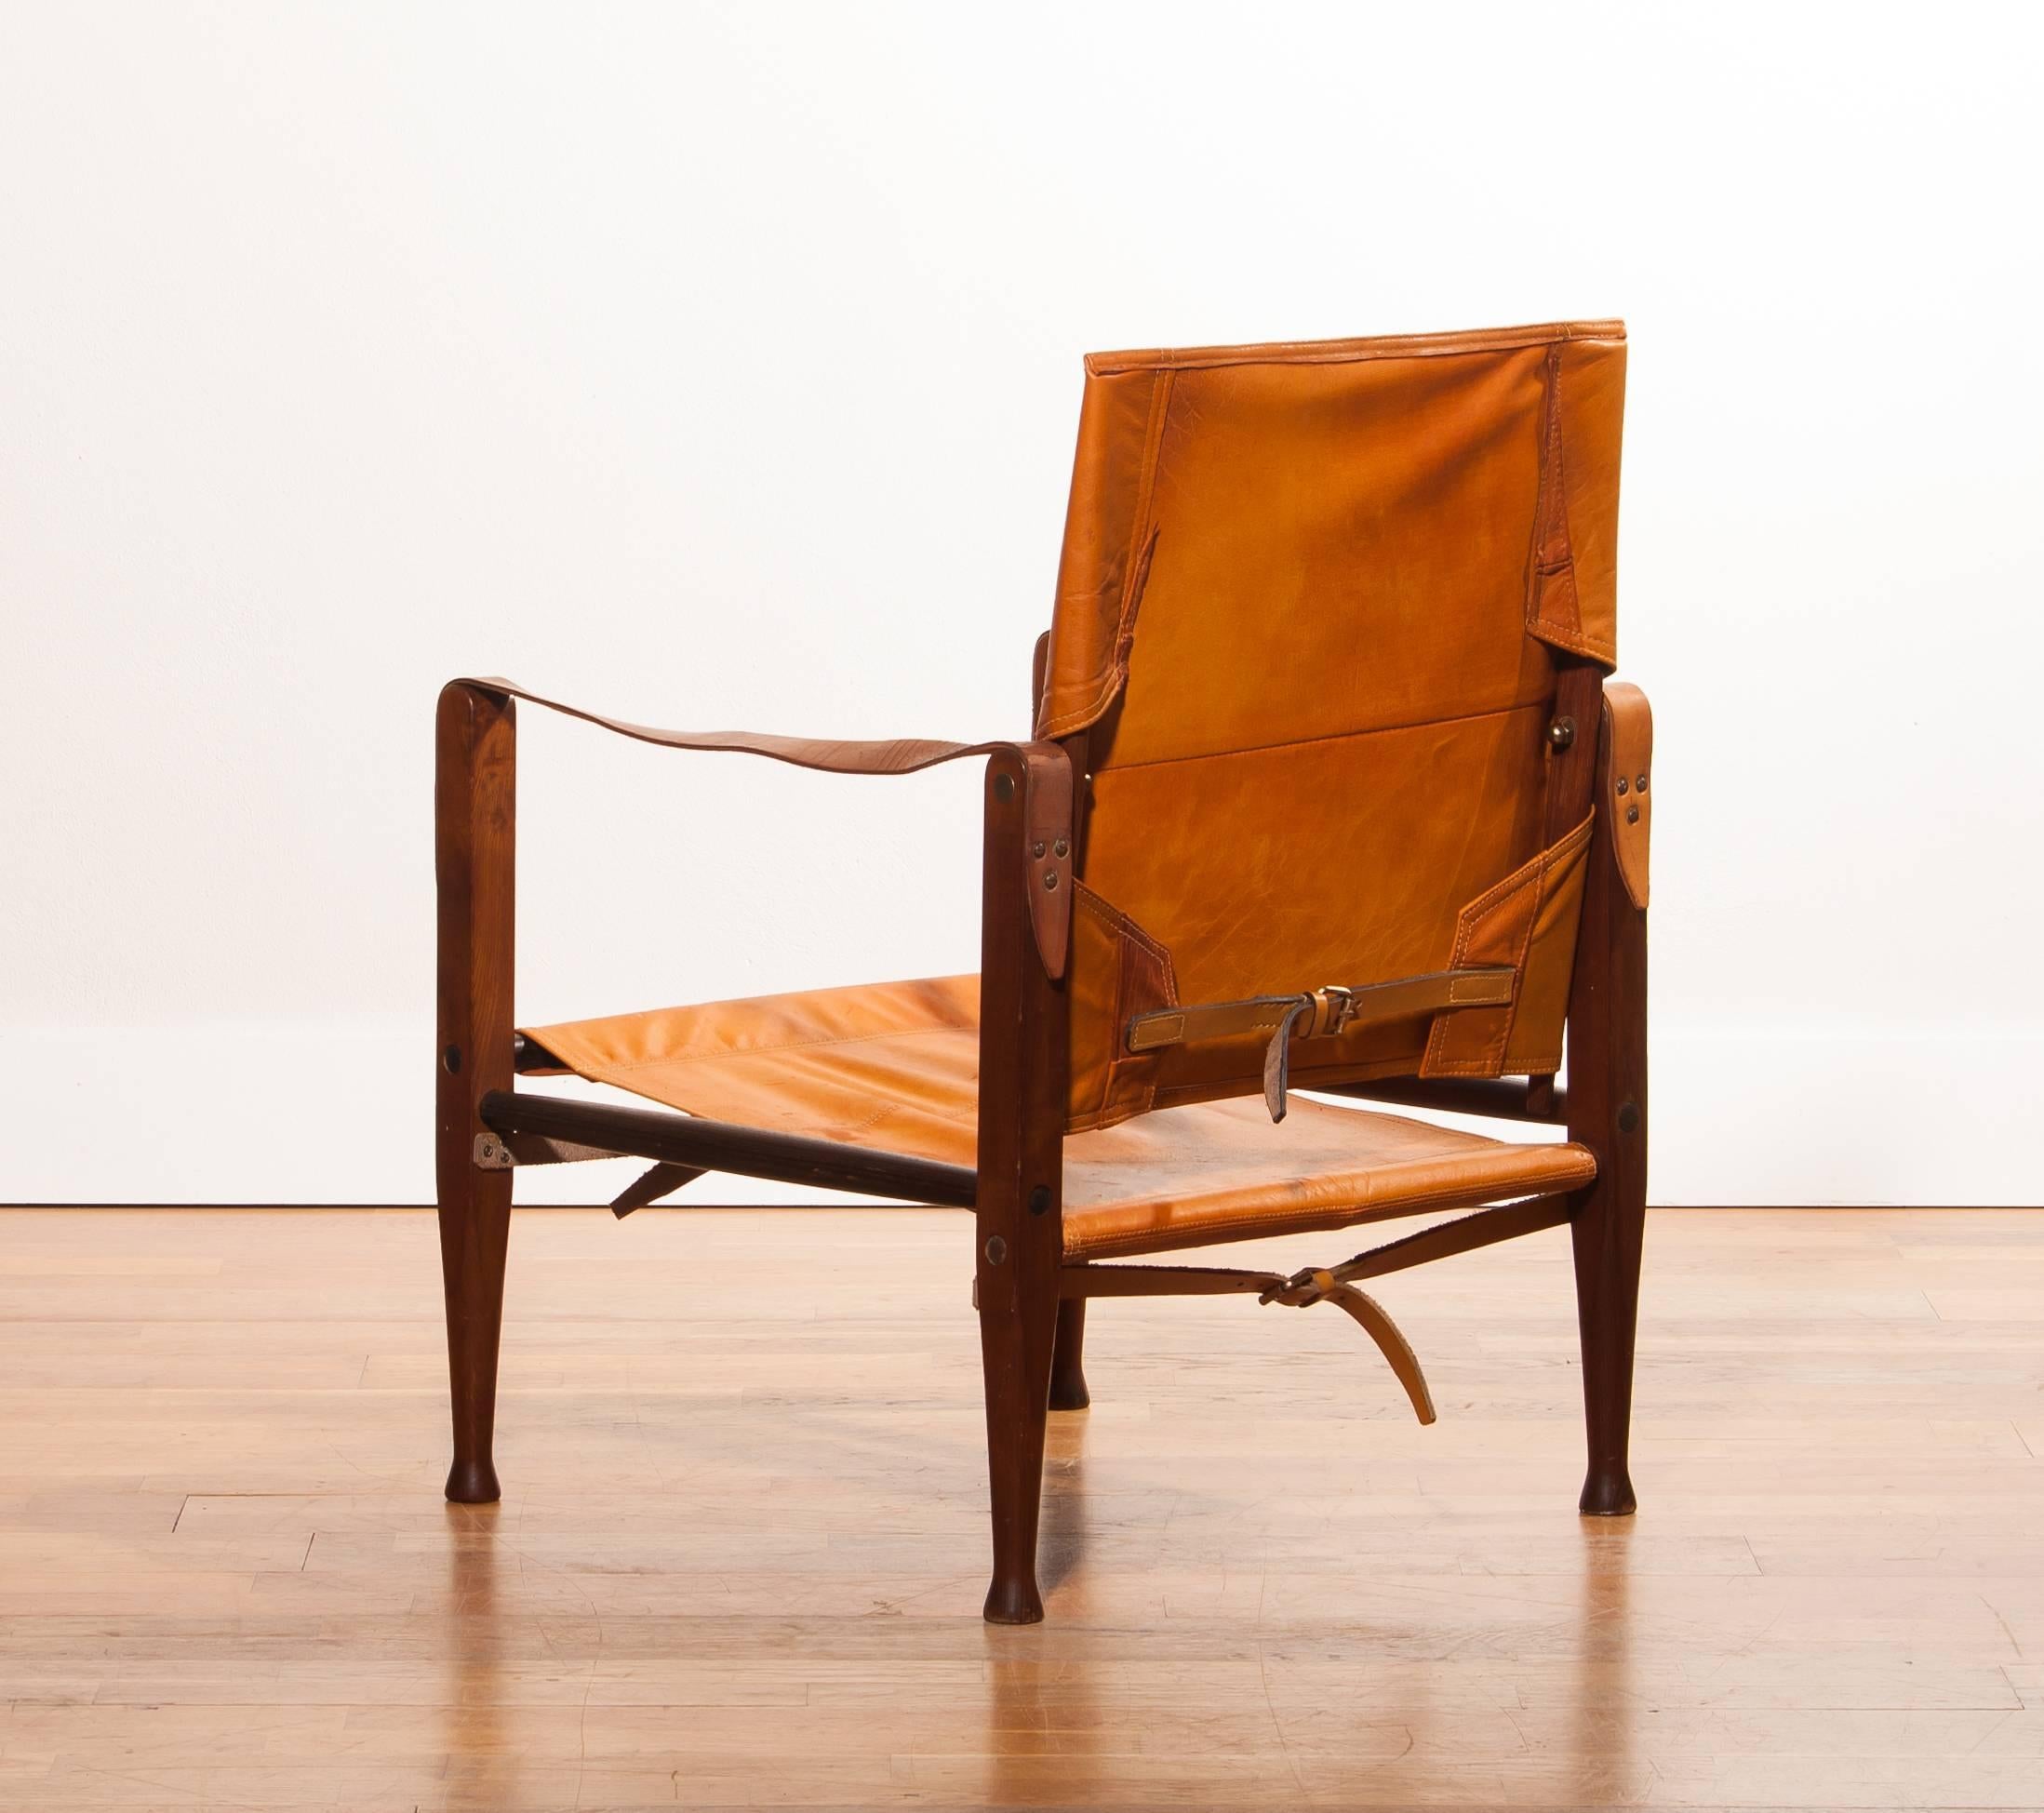 Danish 1930s, a Kaare Klint Safari Chair for Rud. Rasmussen